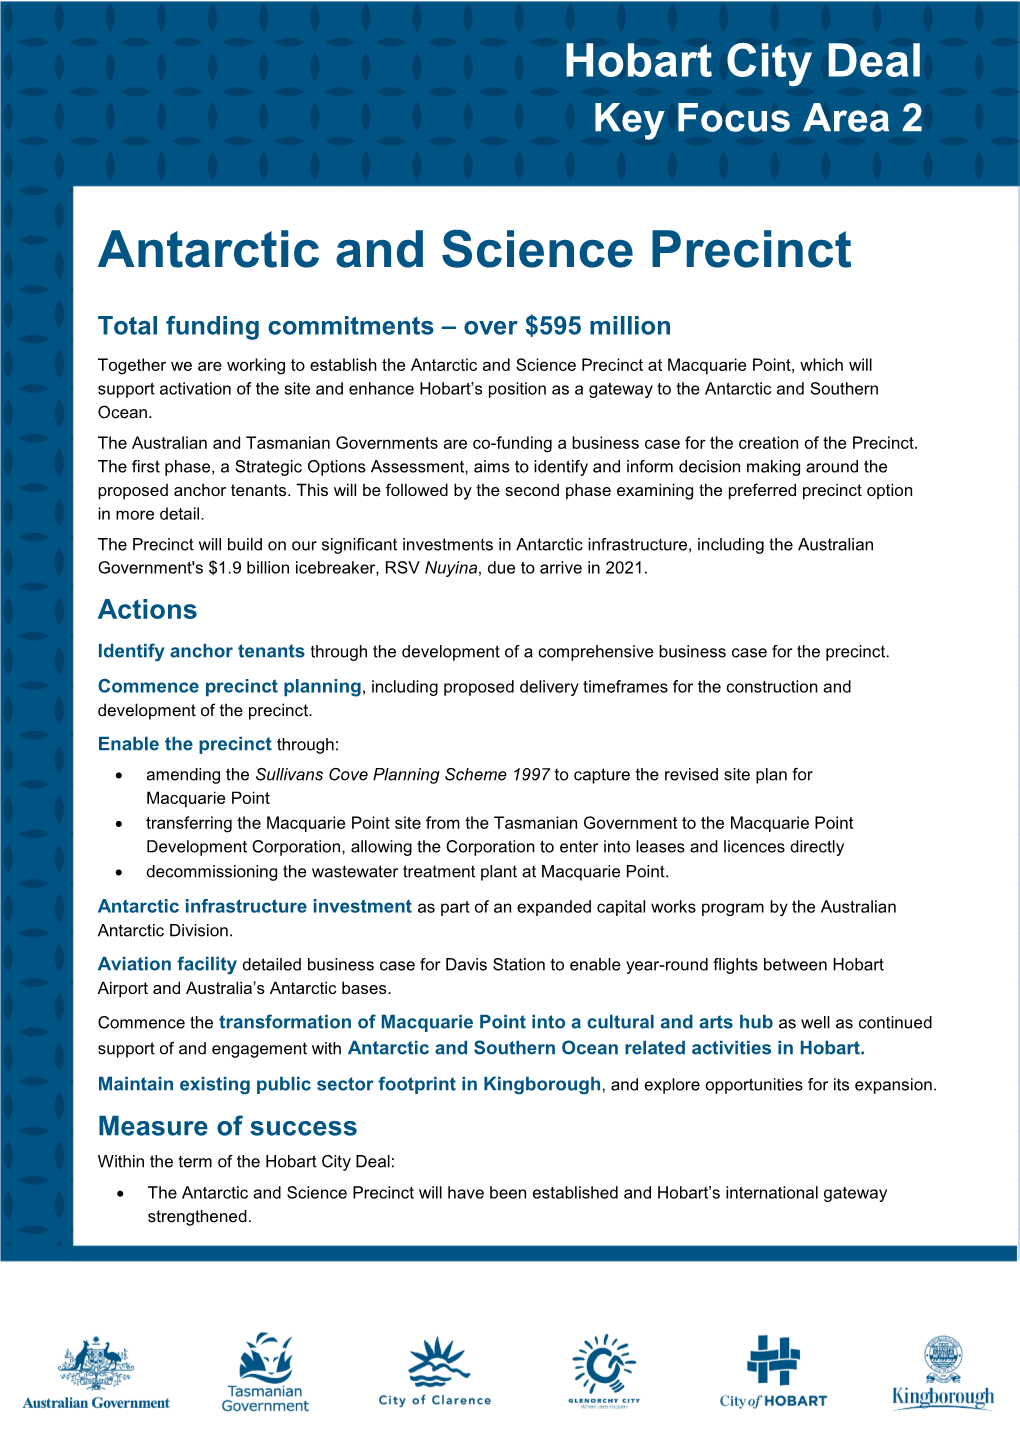 Antarctic and Science Precinct